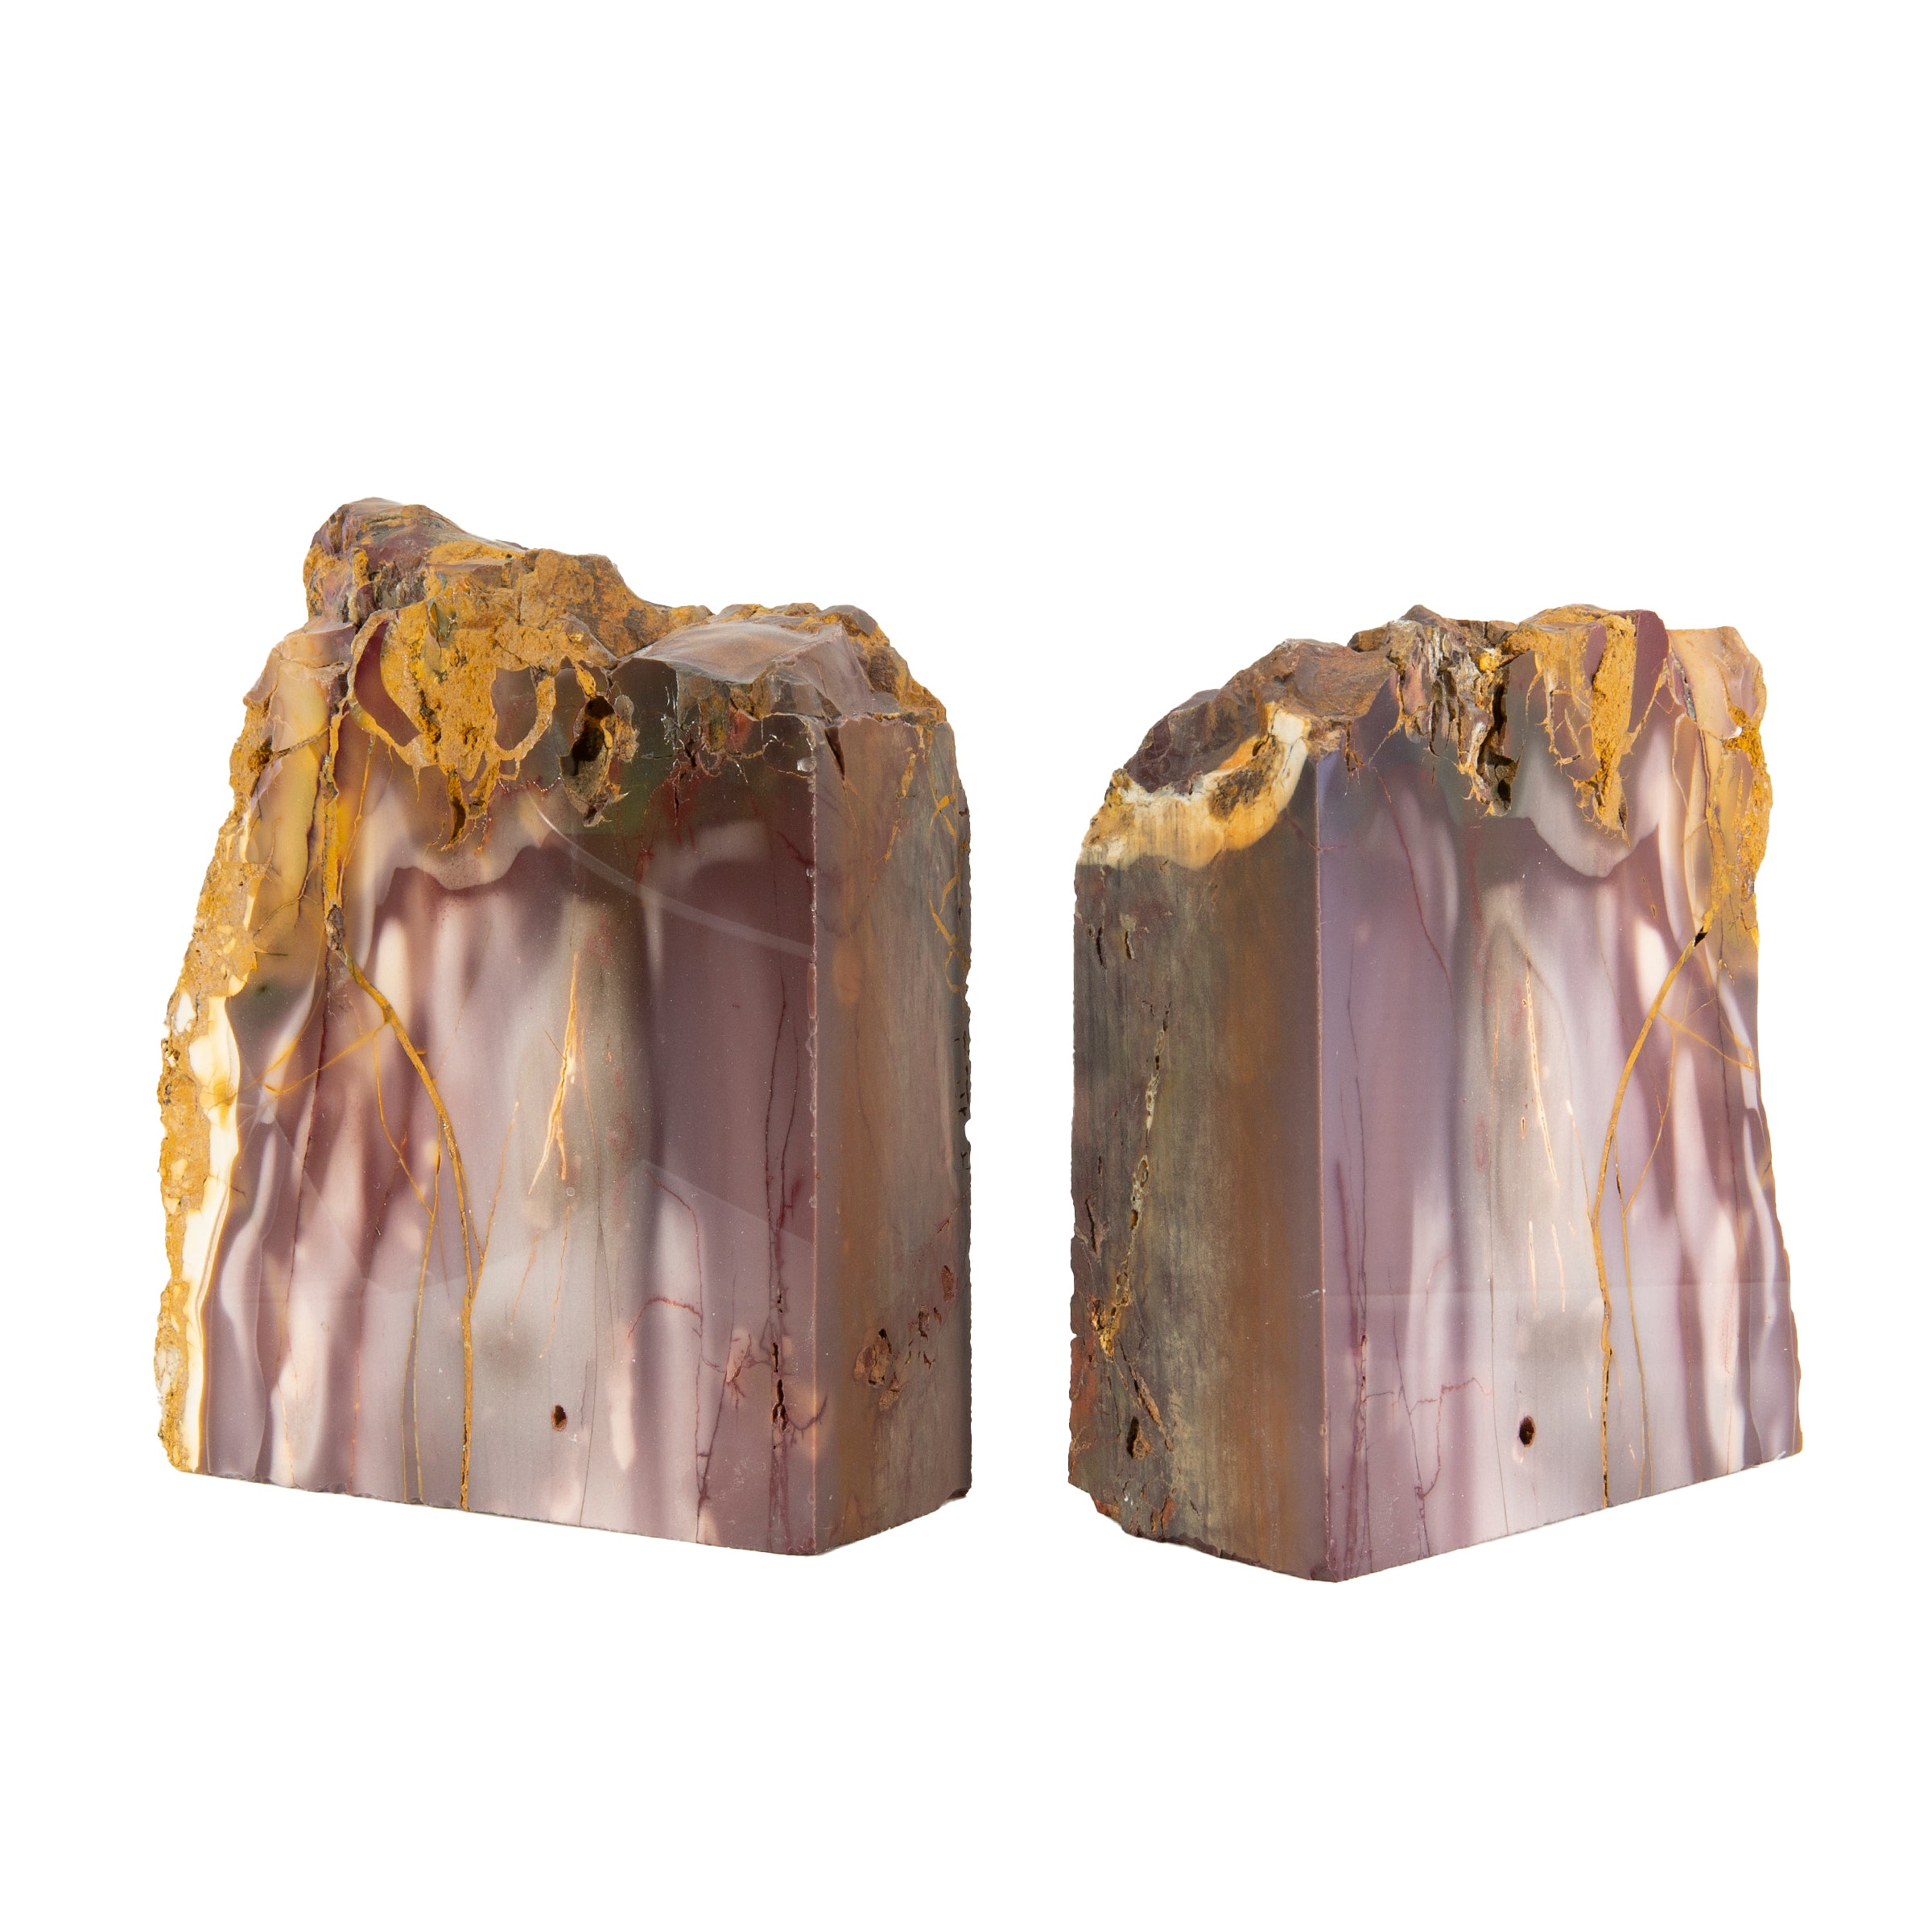 Mookaite 6.5 inch Polished Jasper Bookends - Australia - GGR-007 - Crystalarium